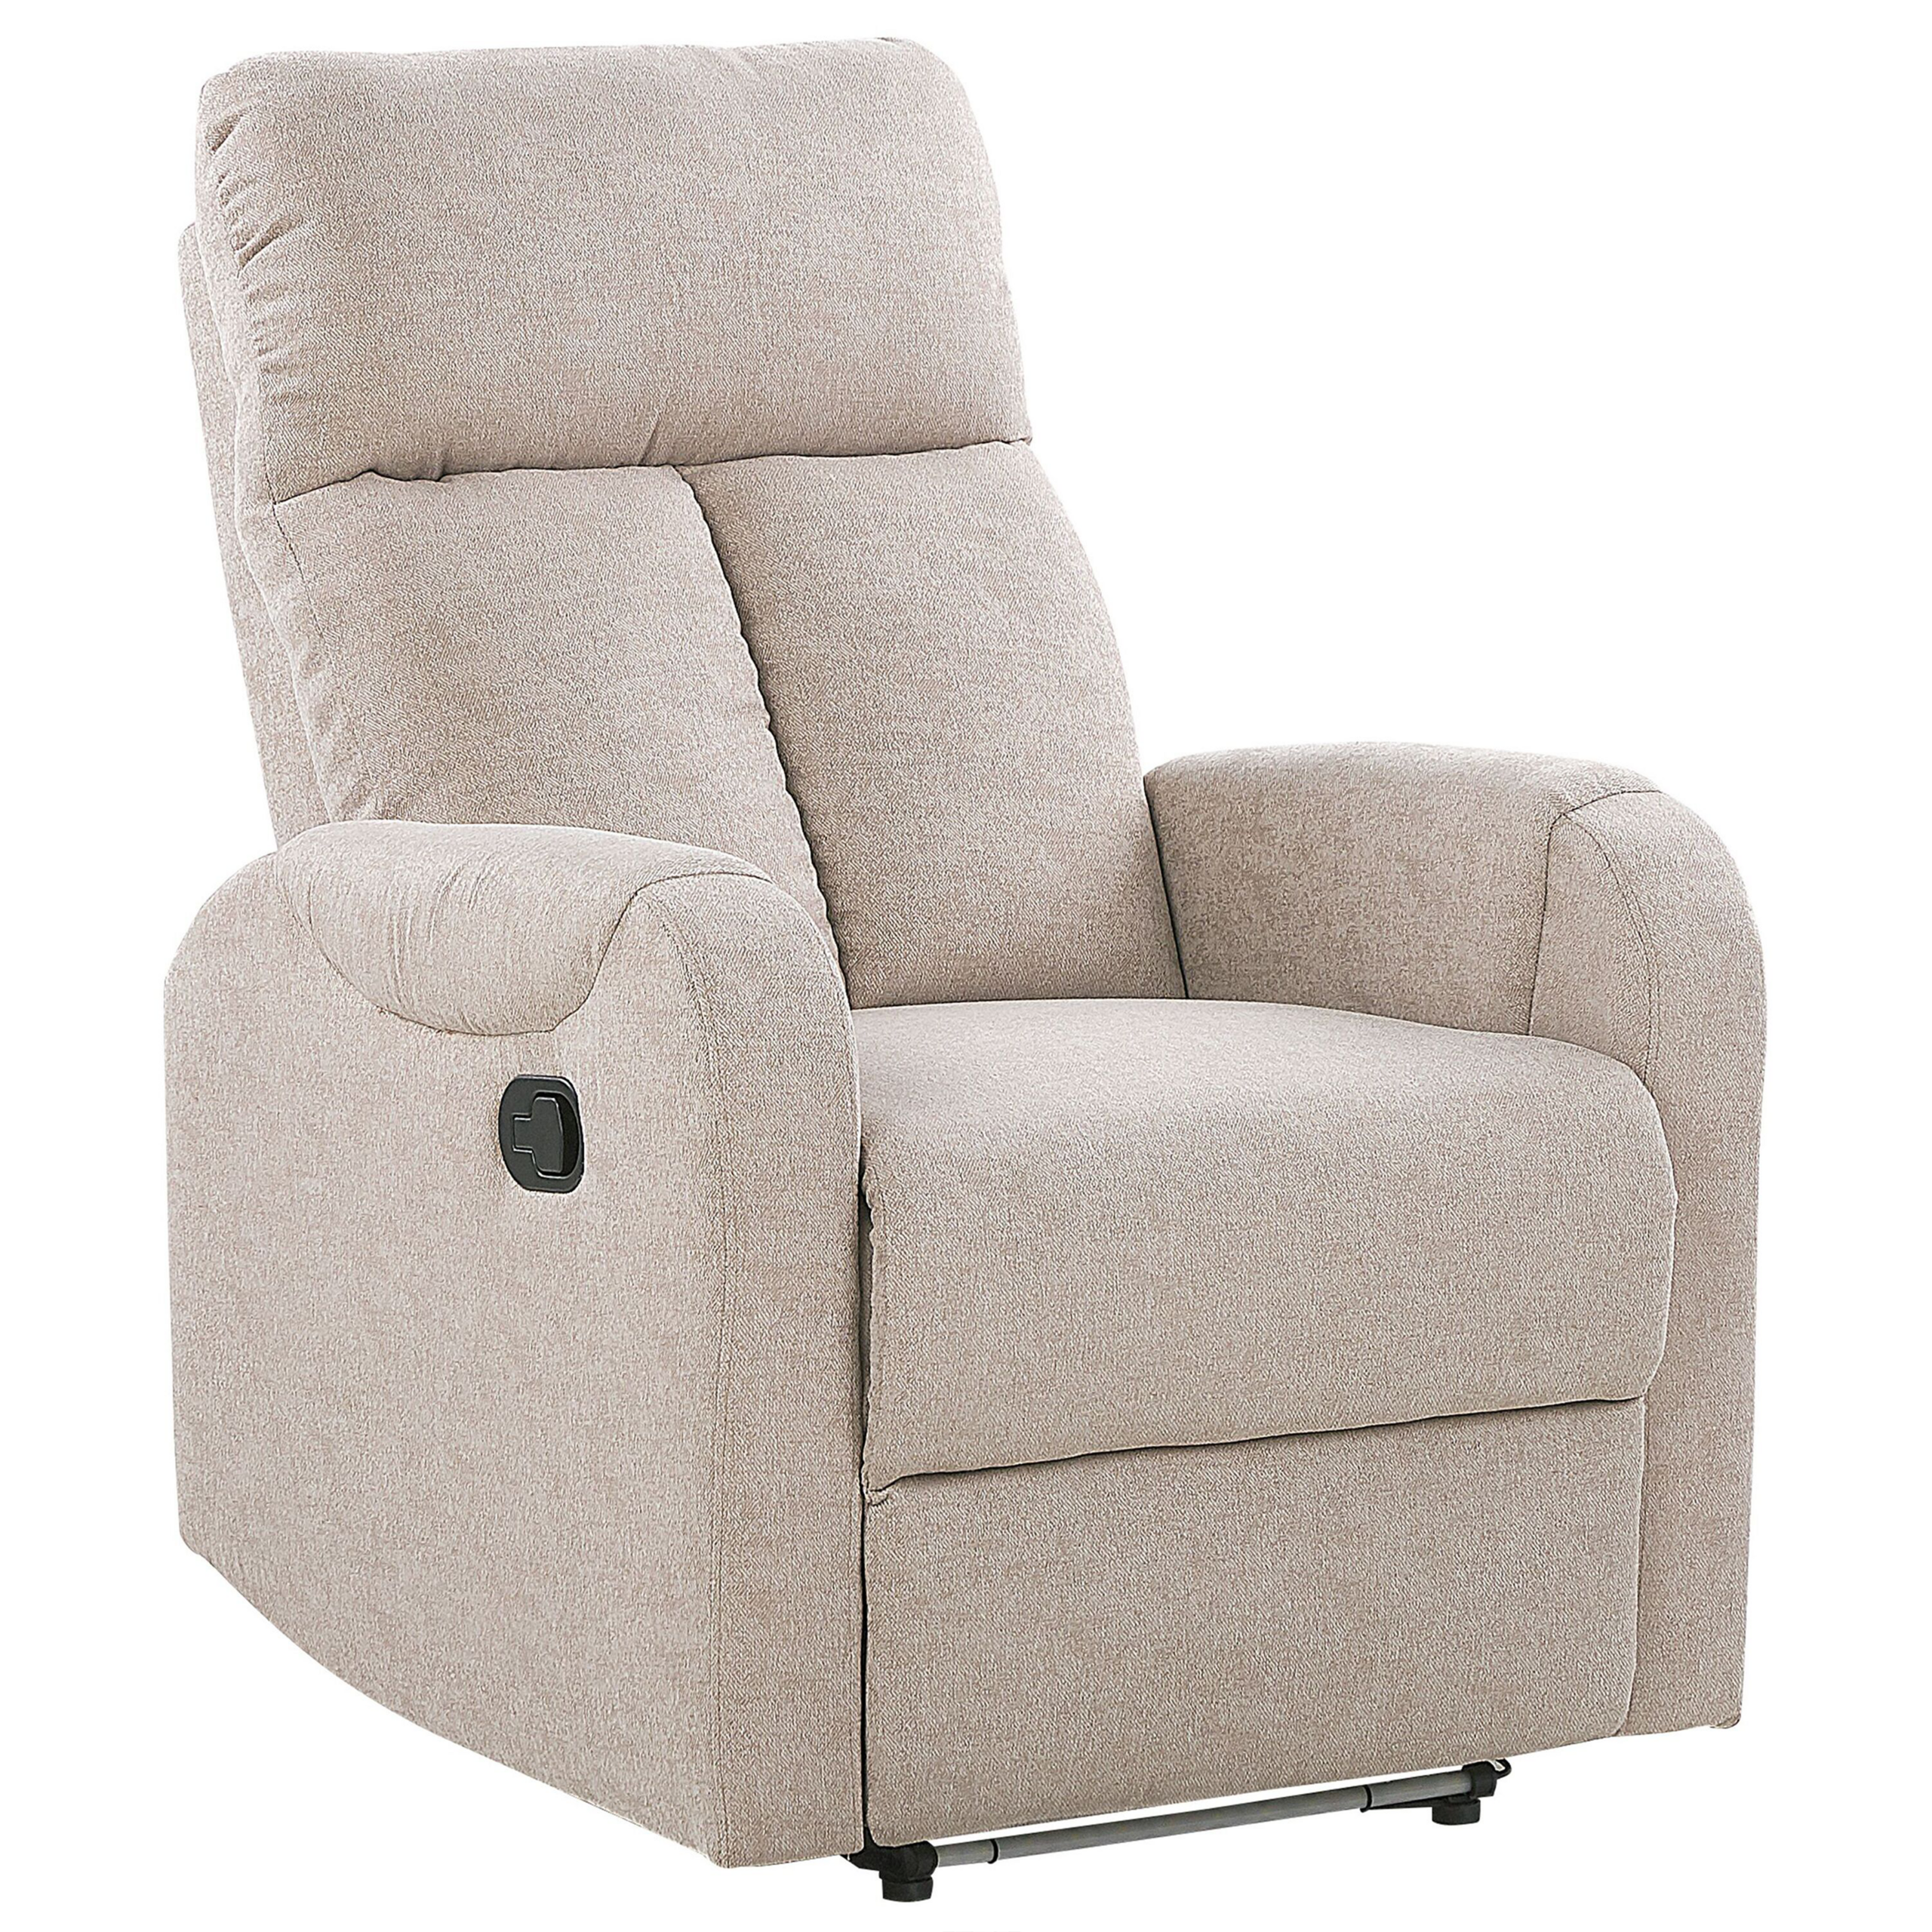 Beliani Recliner Chair Beige Fabric Upholstery Polyester White LED Light USB Port Modern Design Living Room Armchair